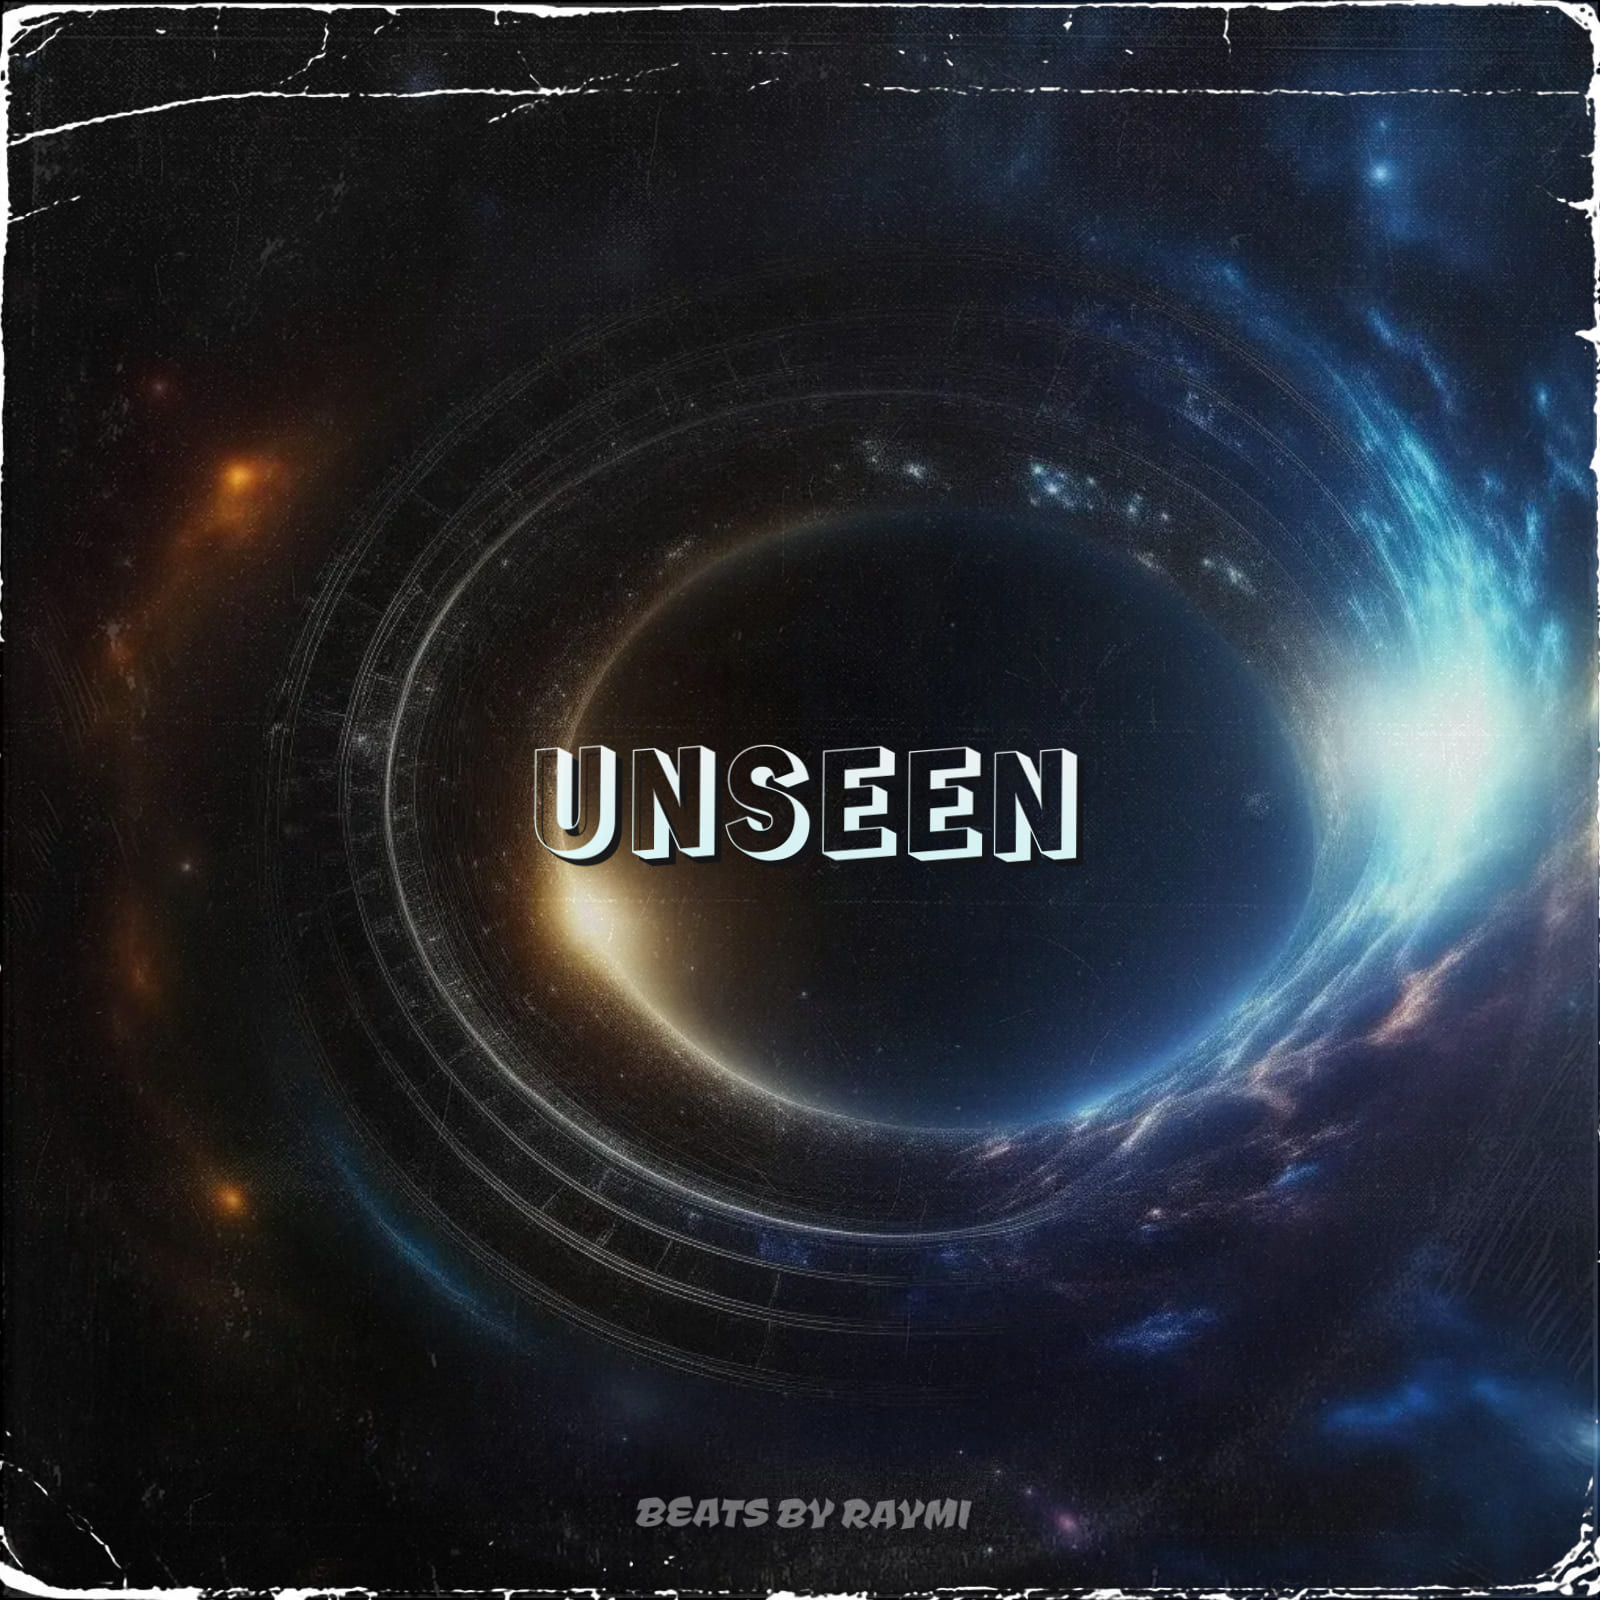 обложка бита, Raymi, музыка, cover, Unseen (необычный, атмосферный бит)